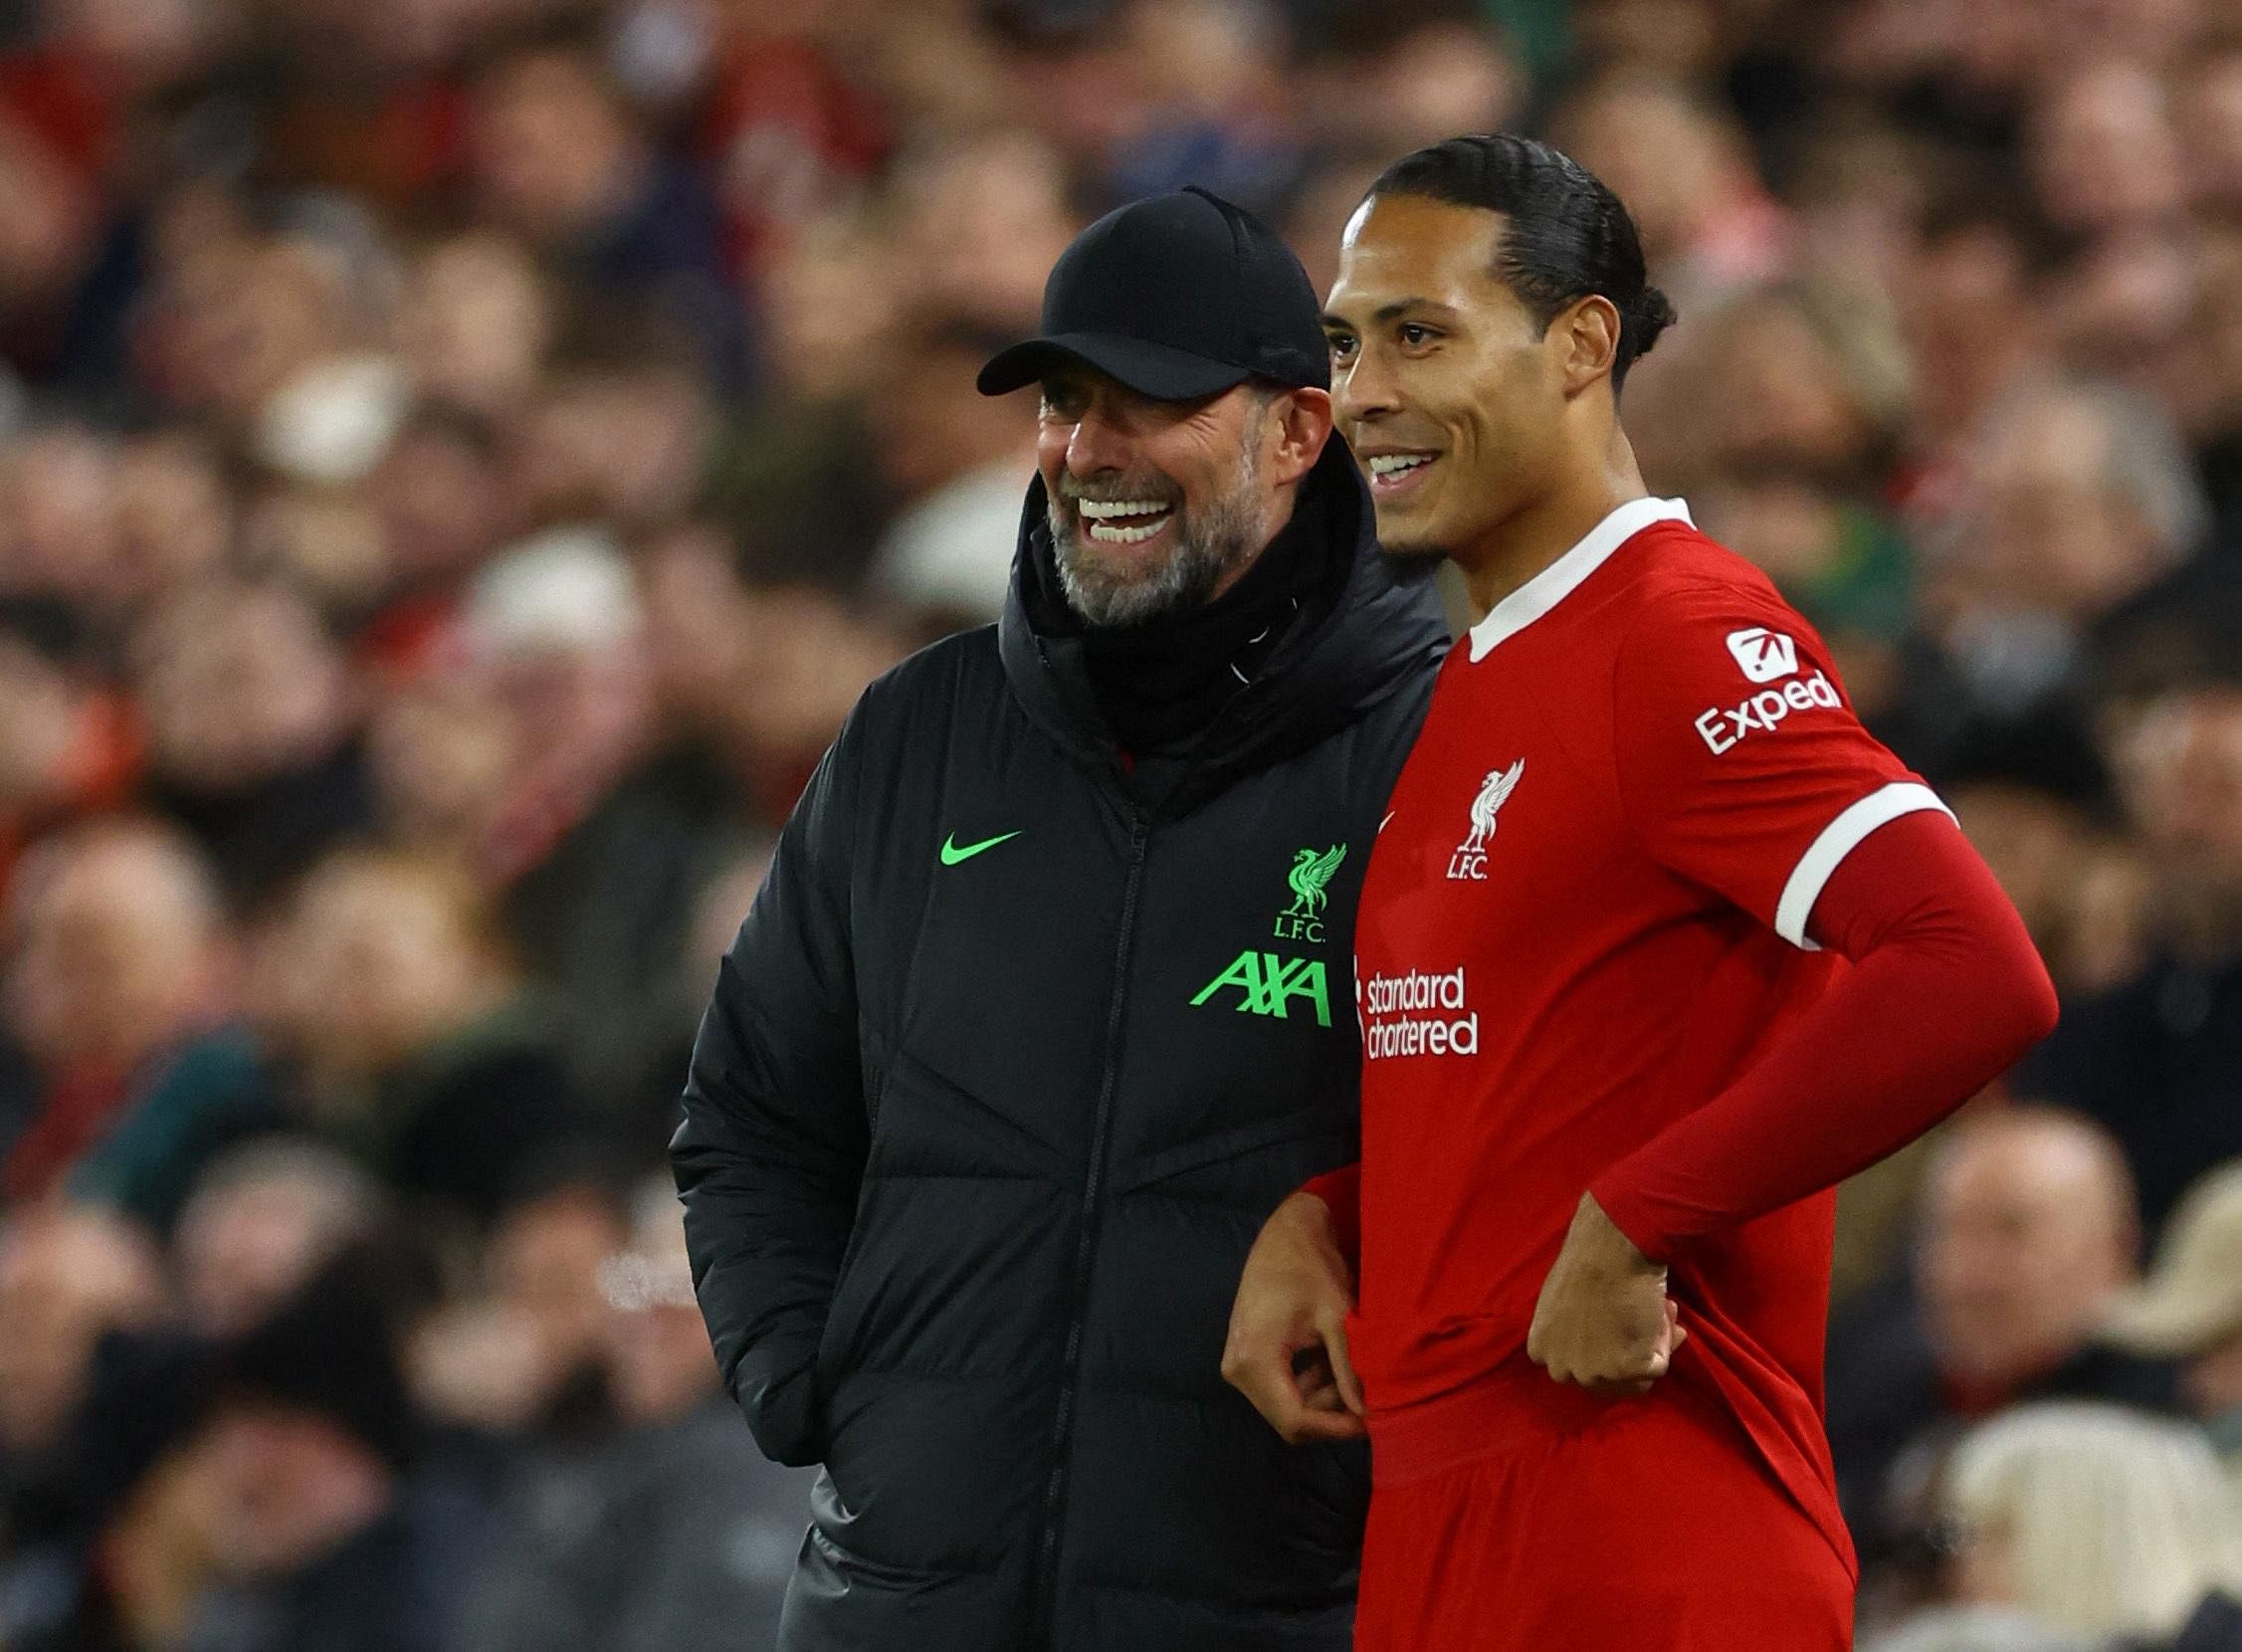 Virgil van Dijk revels in pressure of Liverpool’s enduring feud with Manchester United